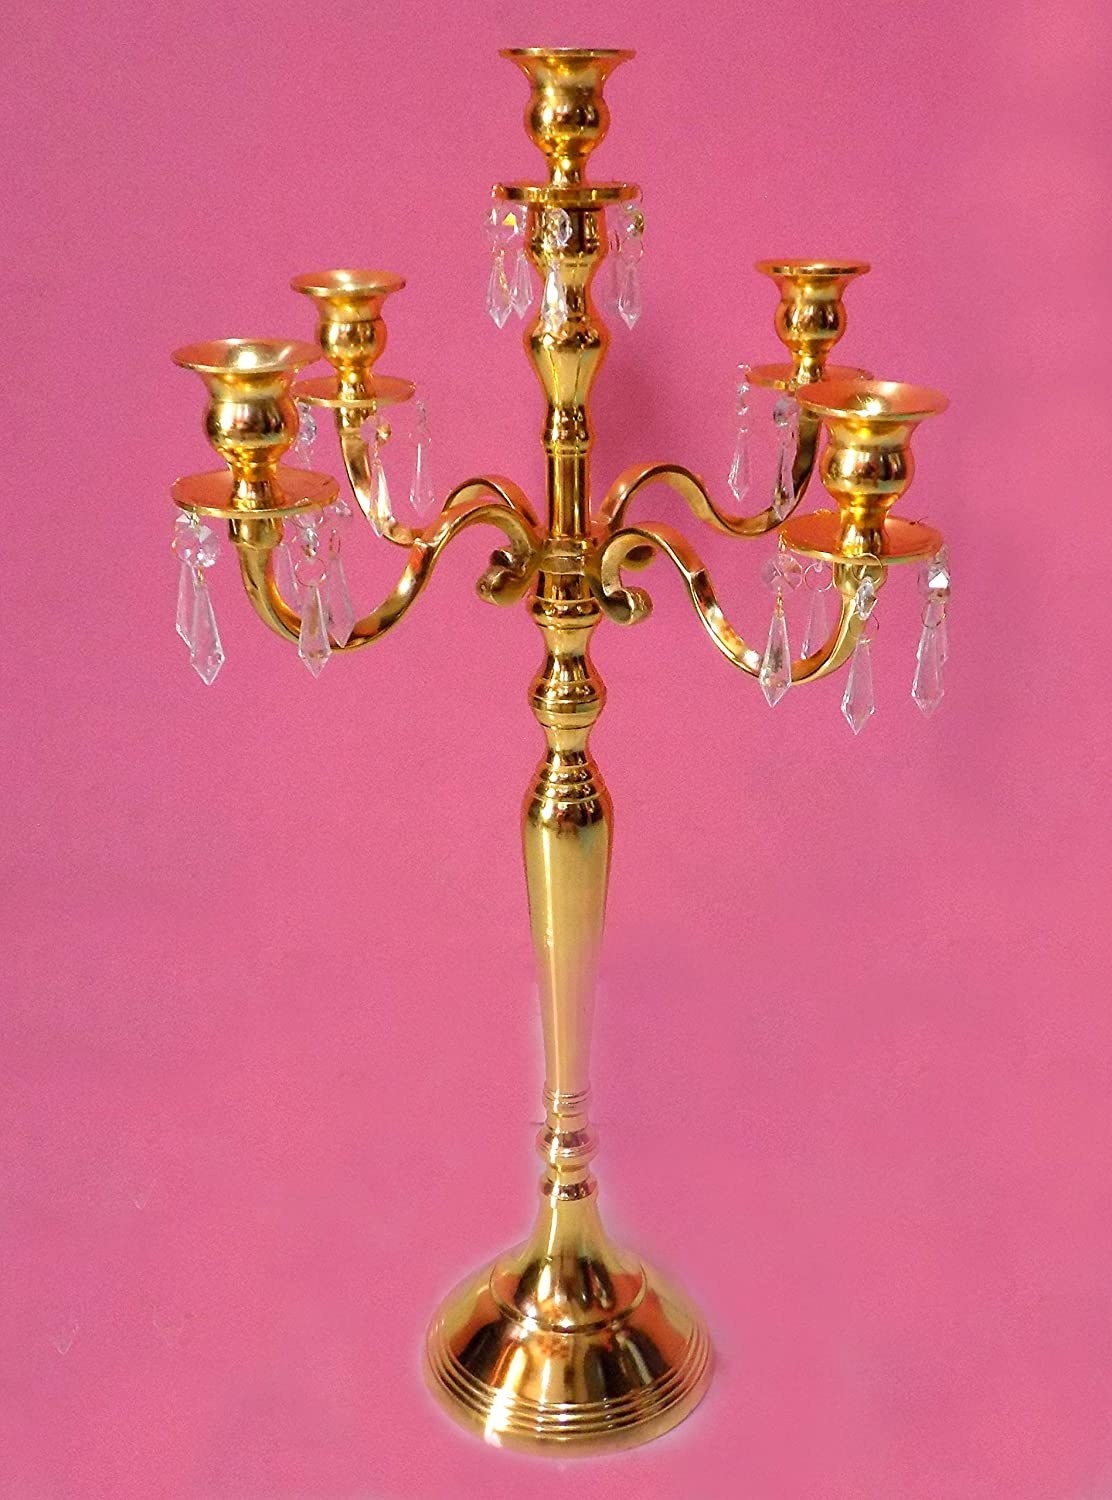 A golden candelabra against a pink background